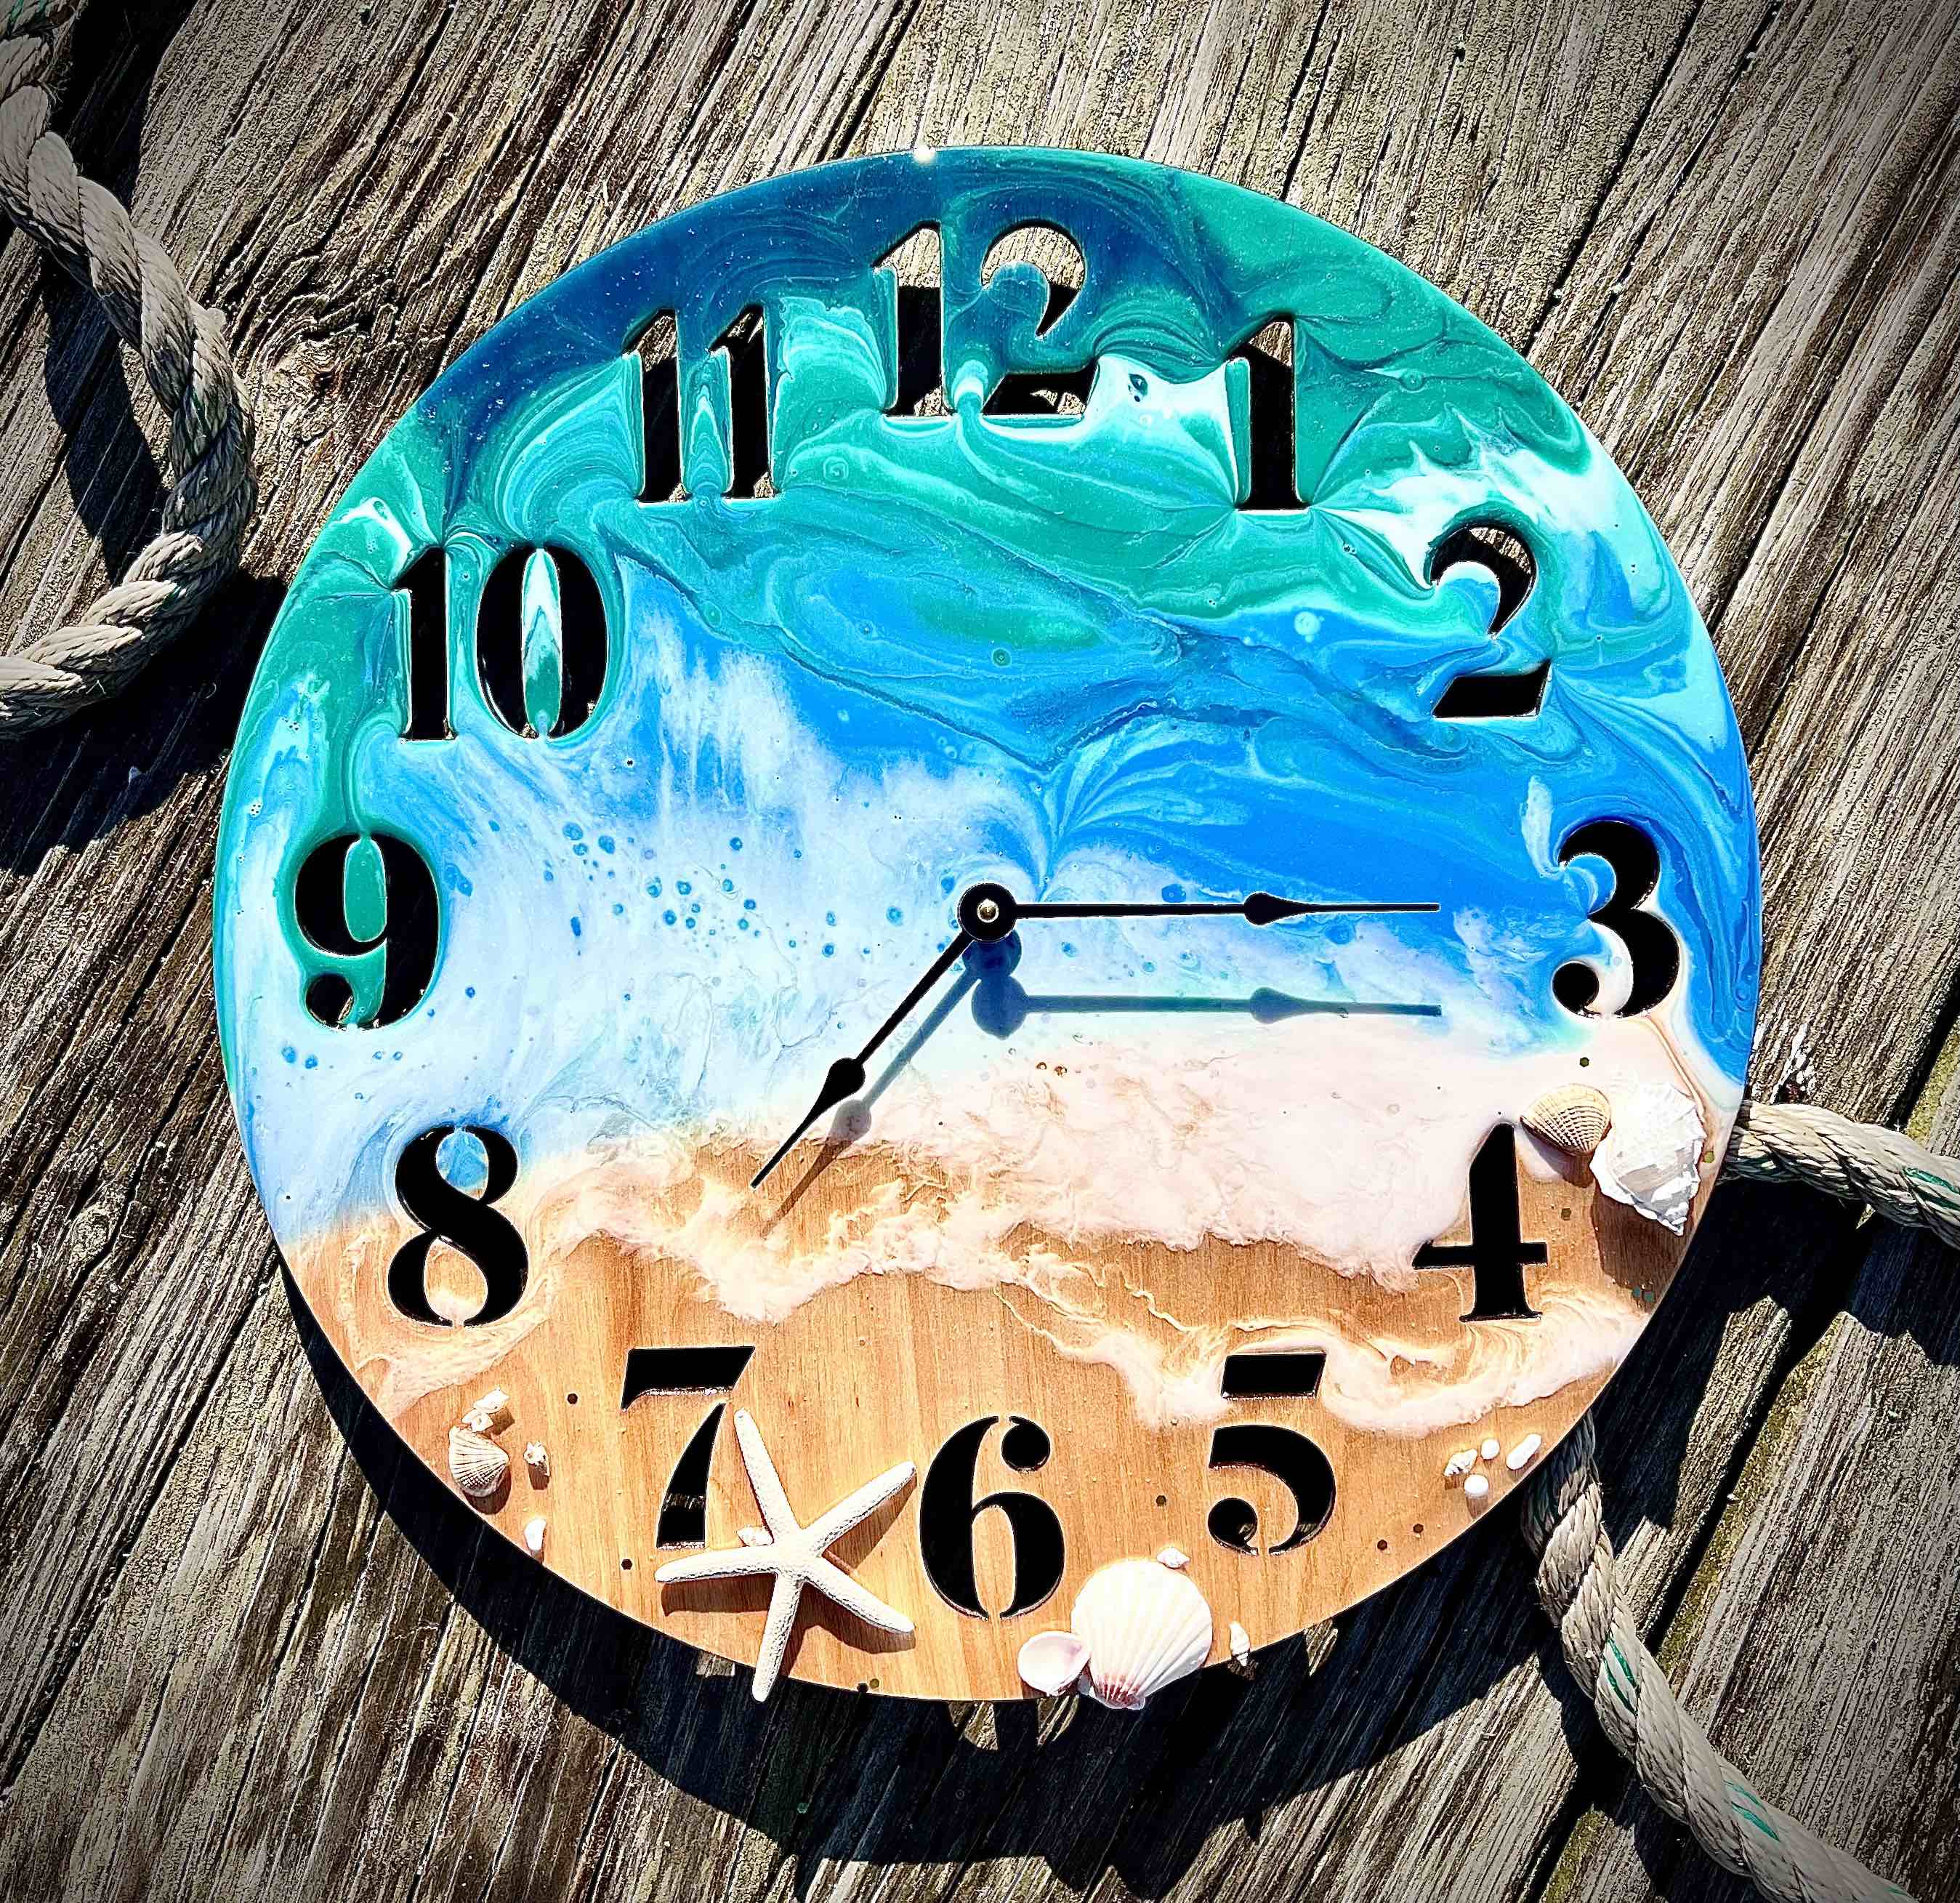 BRAND NEW! Resin Poured Ocean Clock